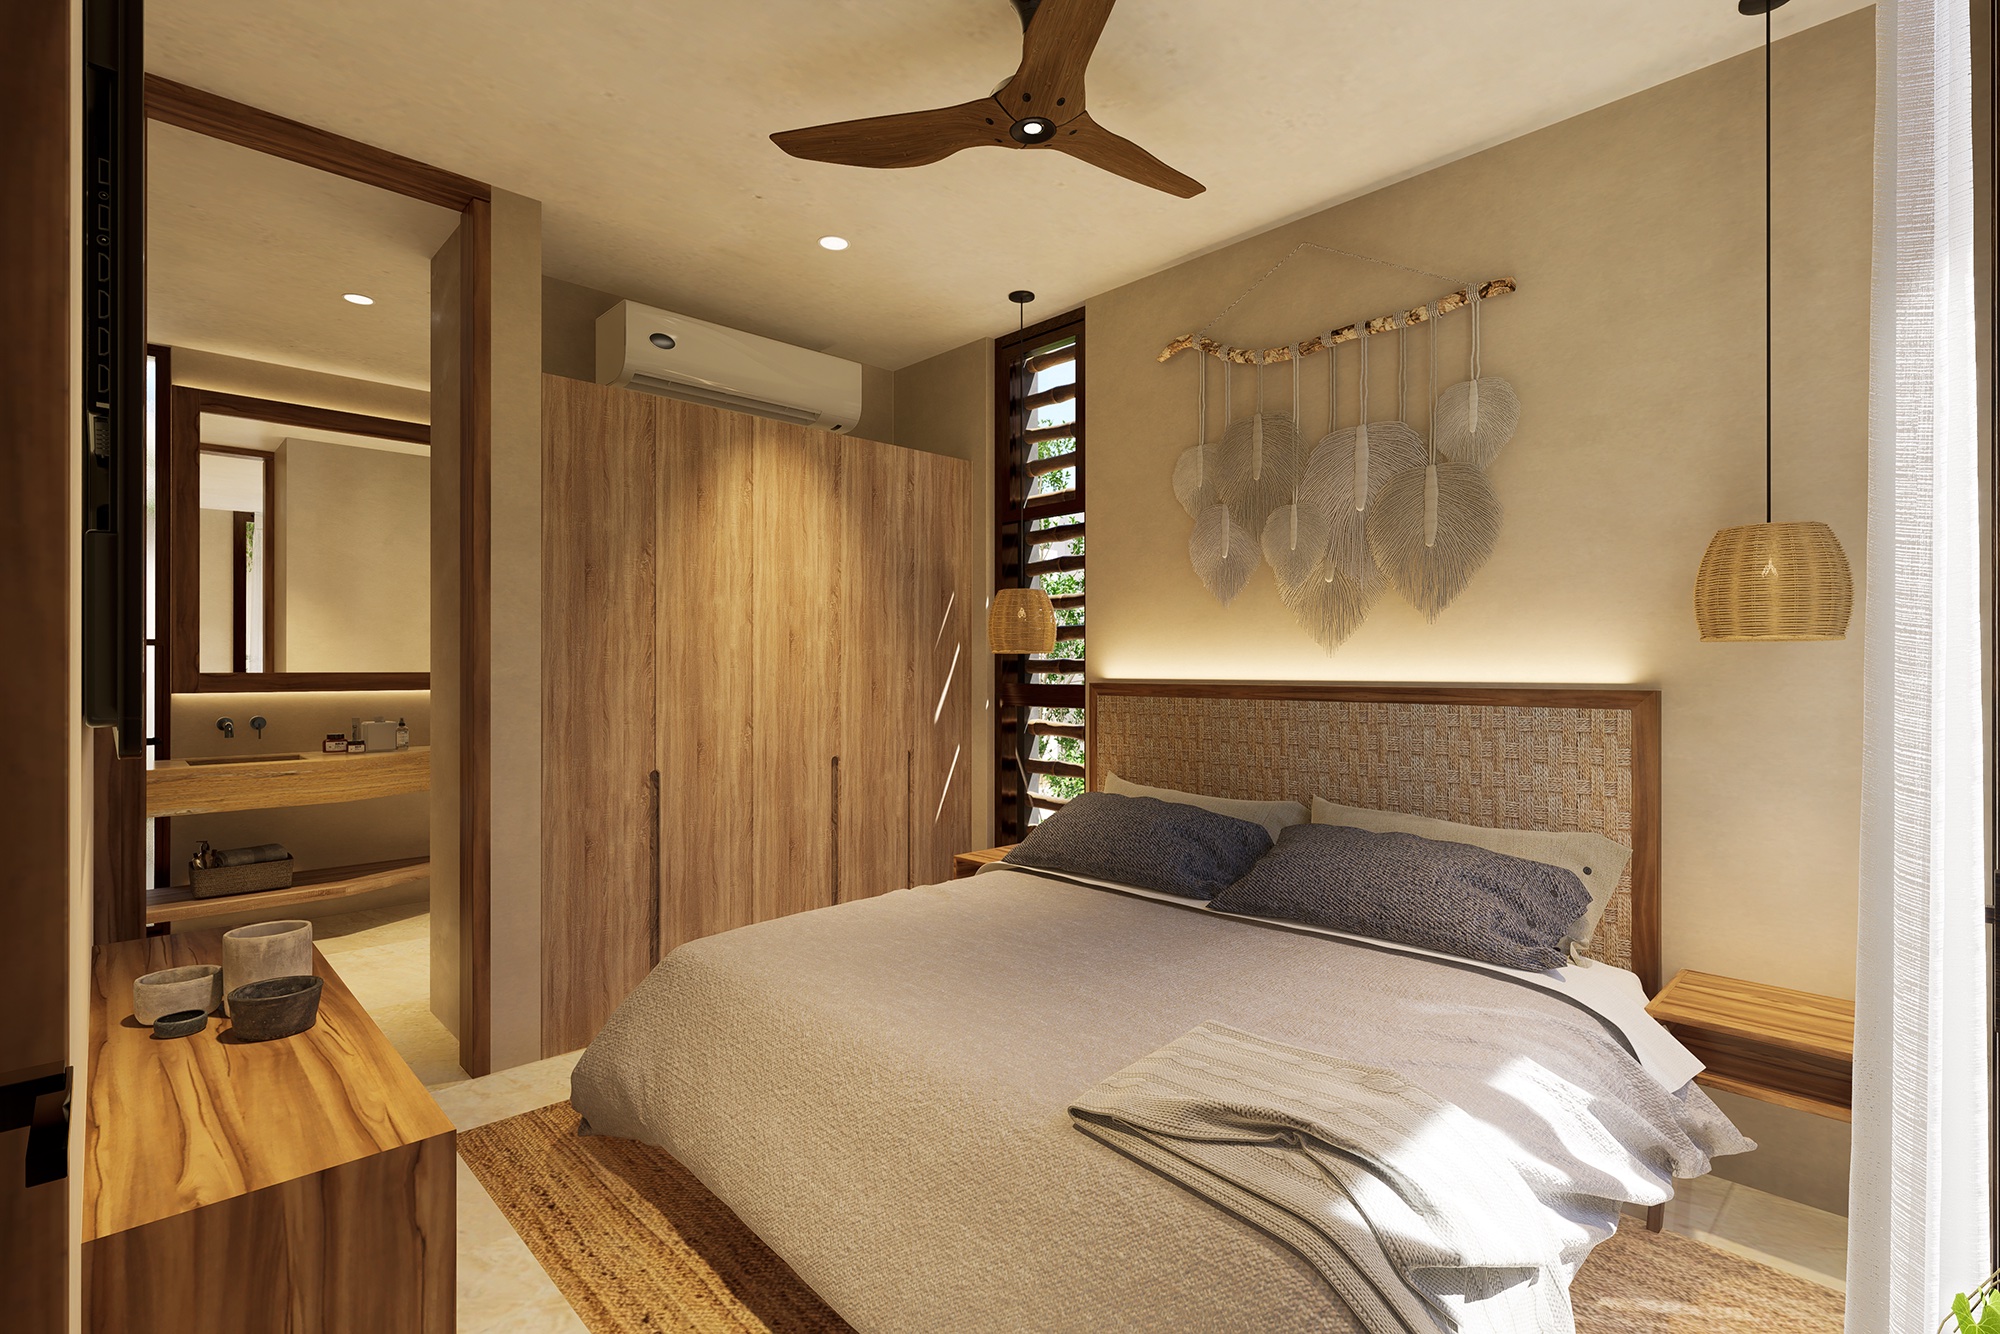 luxury villas for sale in tulum mexico 083 type a bedroom with bathroom